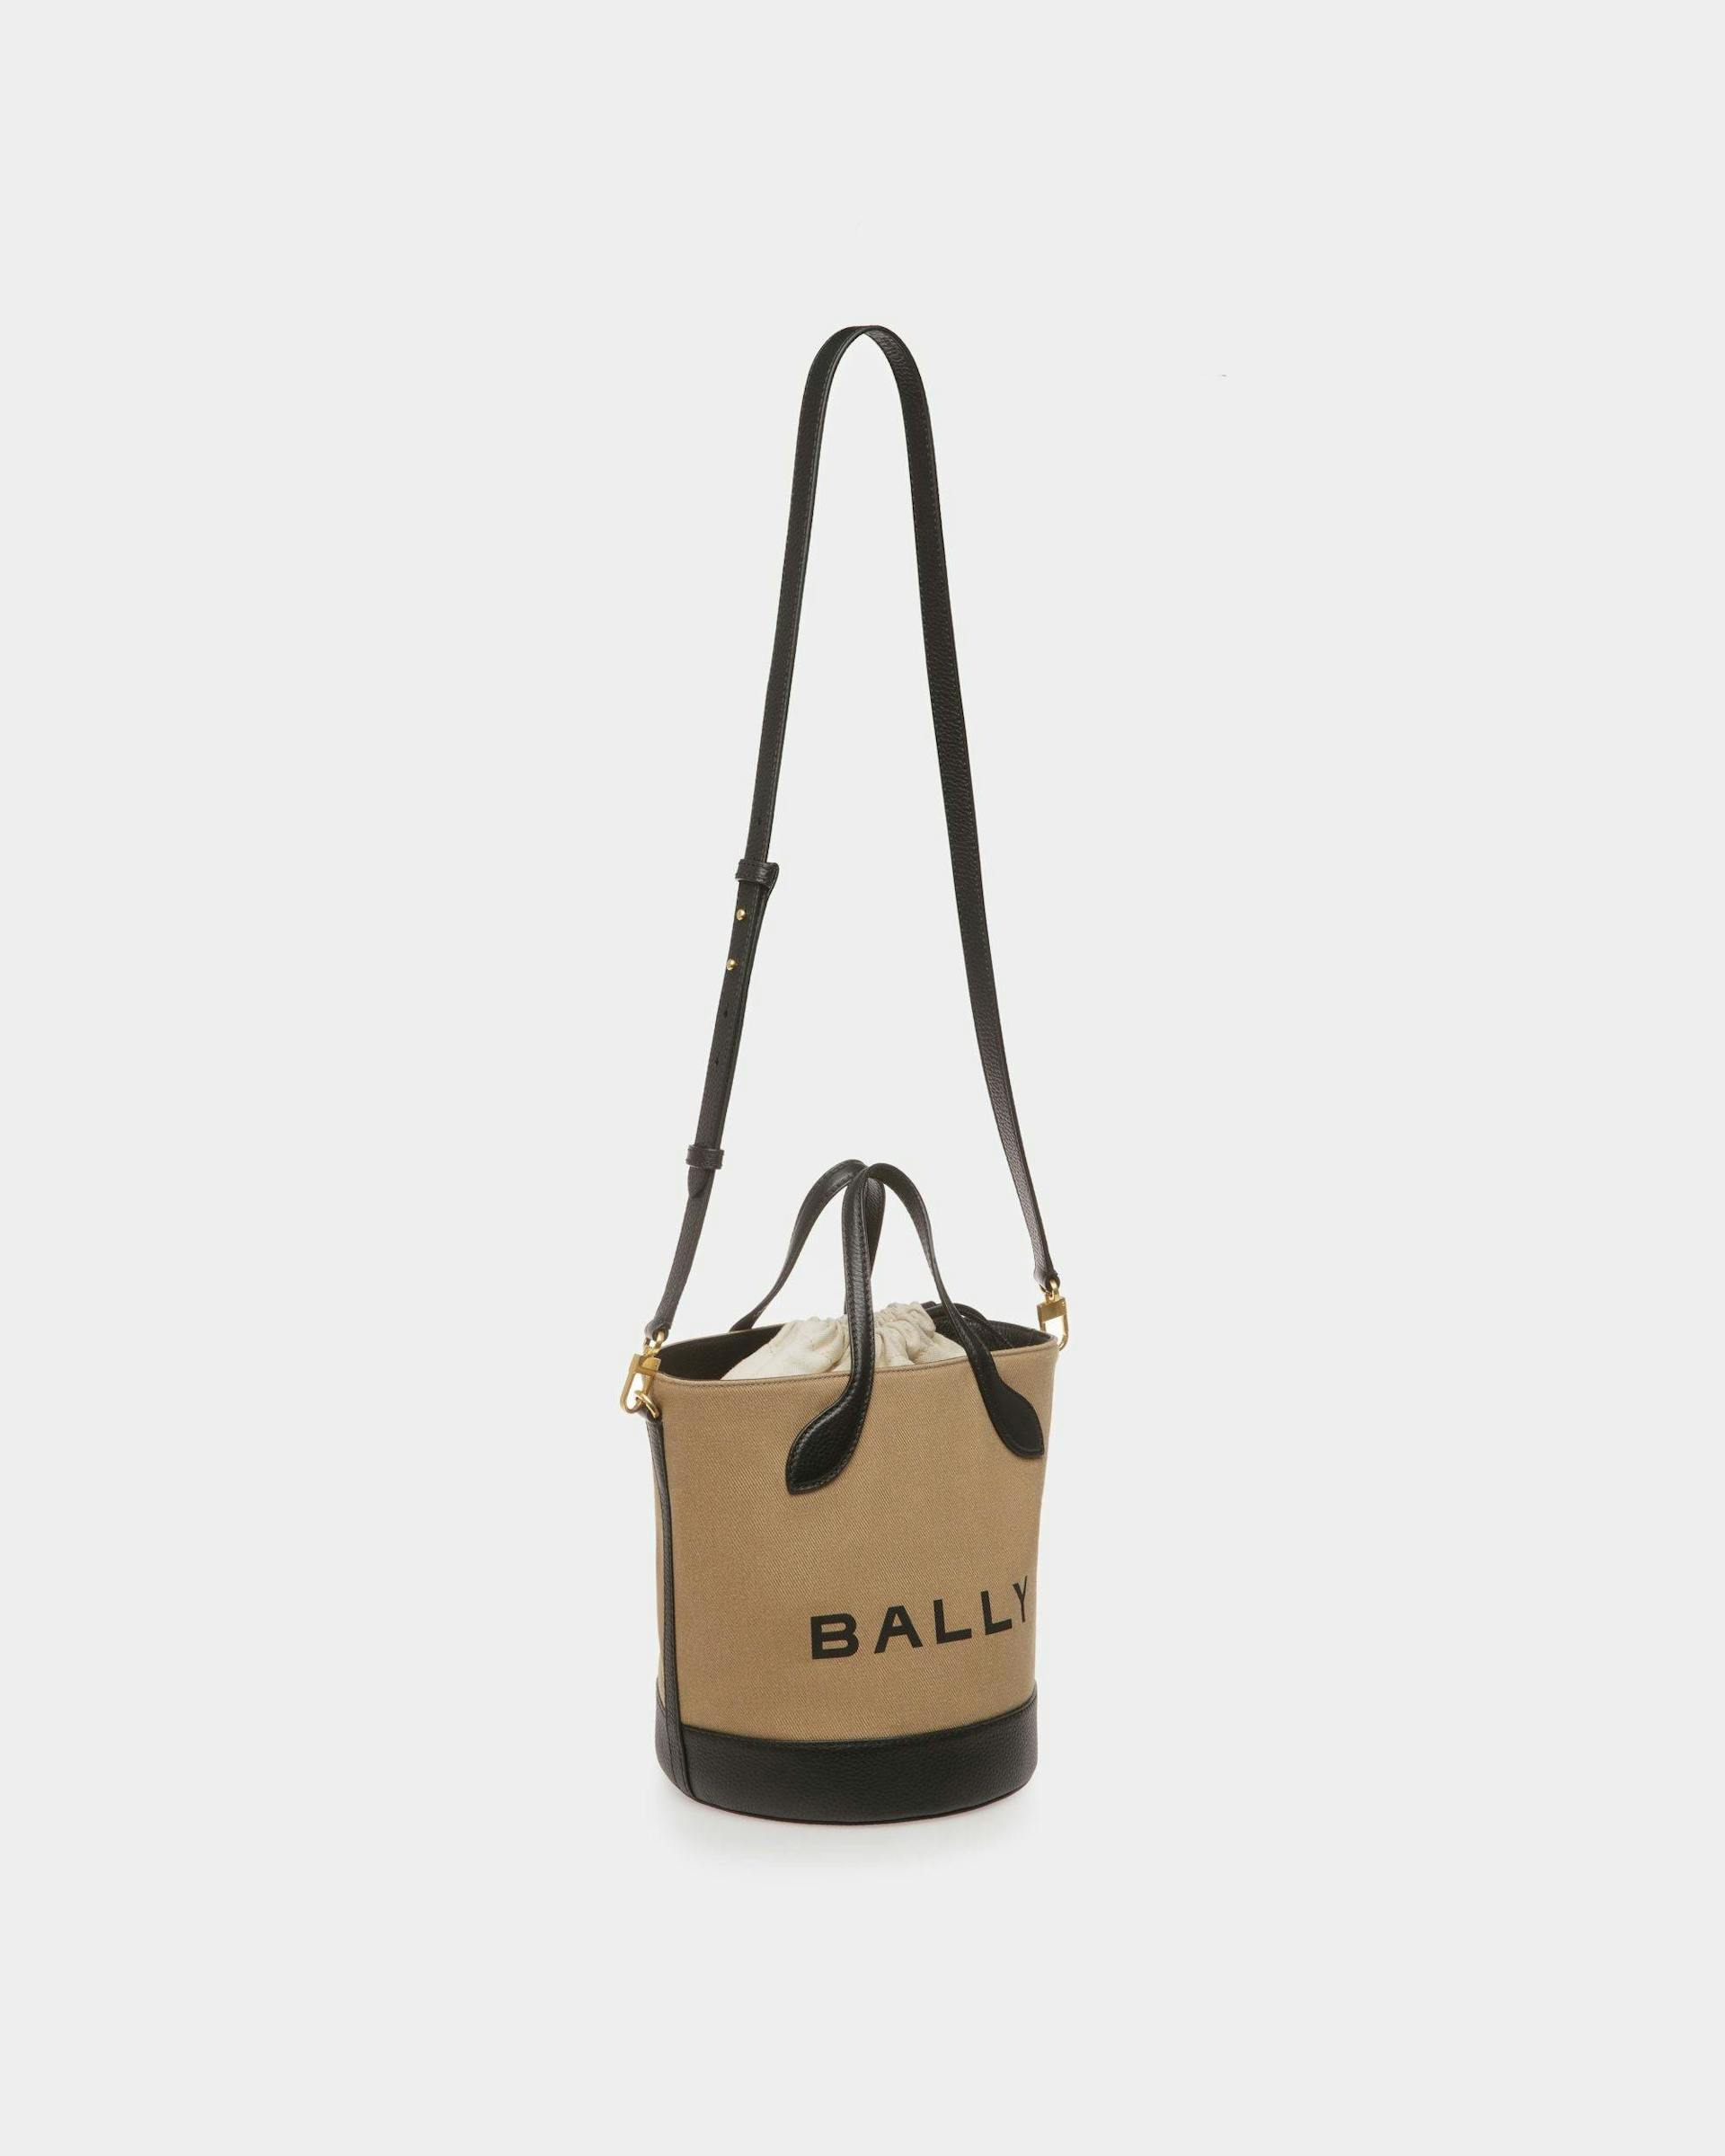 Bar Bucket Bag In Sand And Black Fabric - Women's - Bally - 05